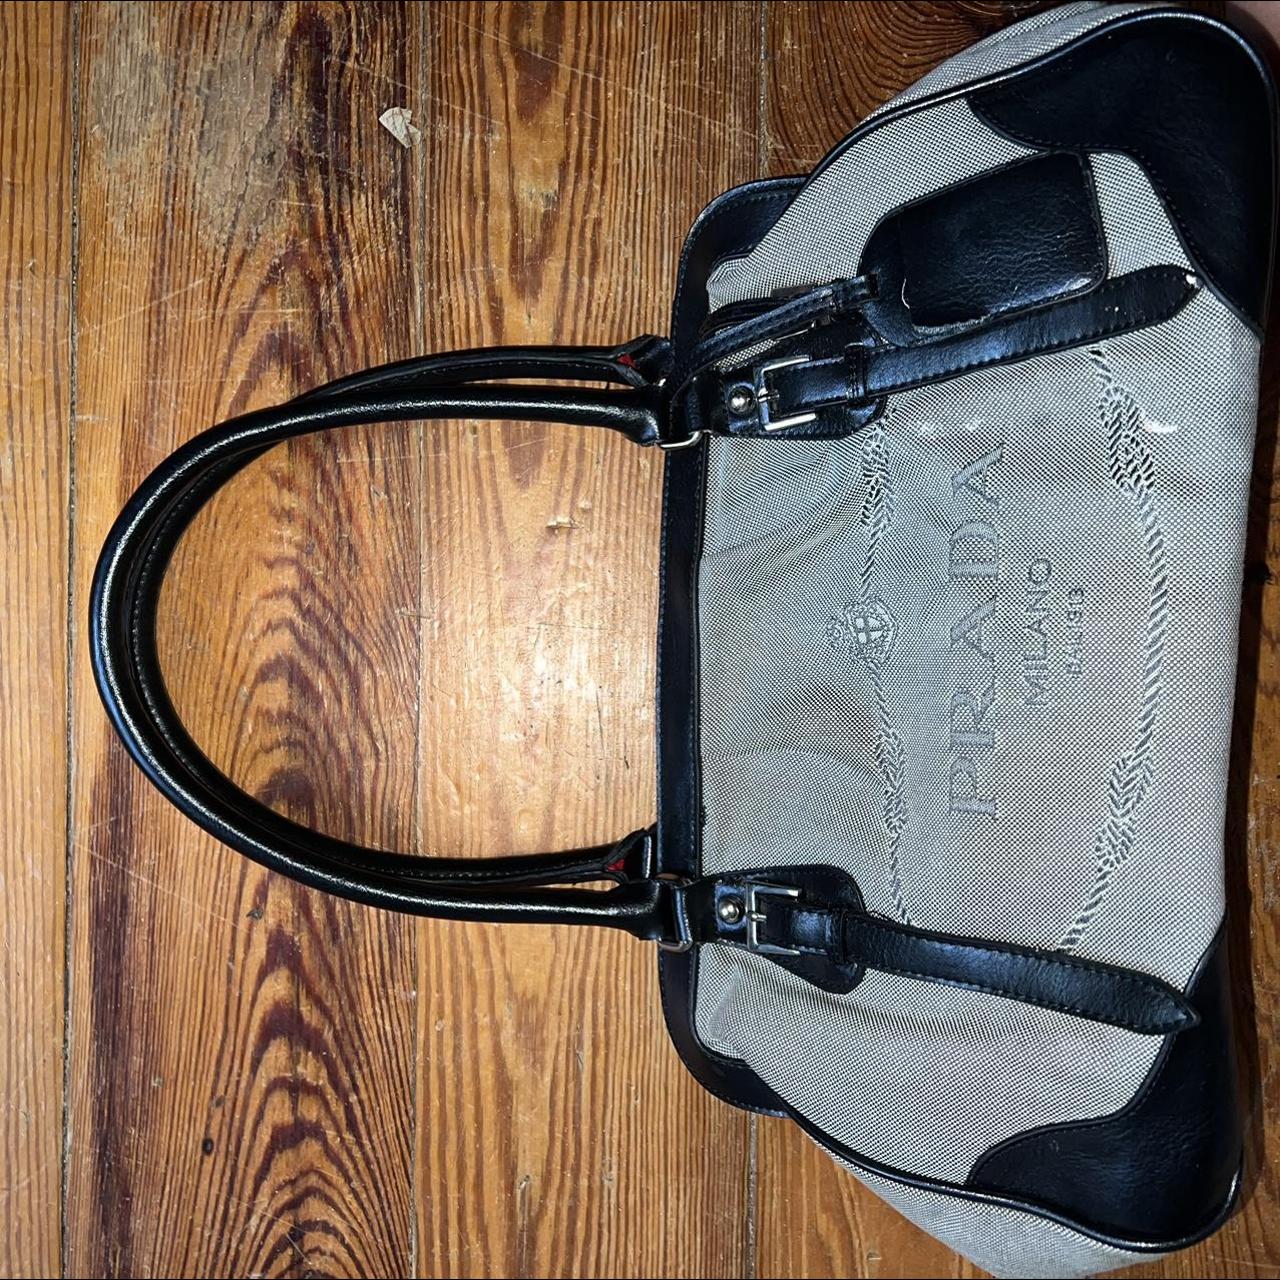 PRADA bag style Milano dal 1913, GREEN. Super cute, - Depop